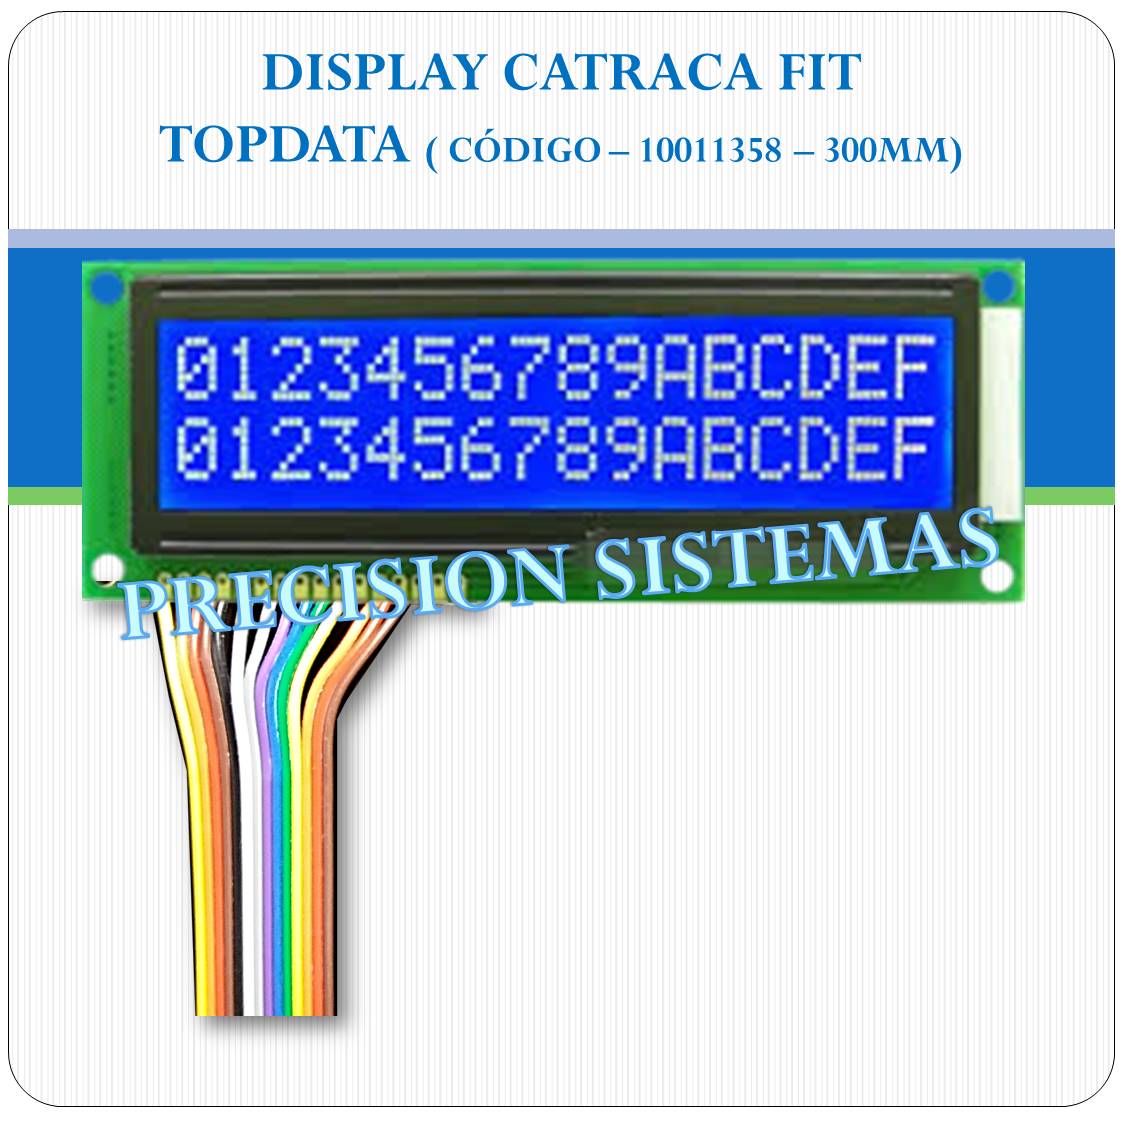 Display Catraca Fit 3 - Topdata